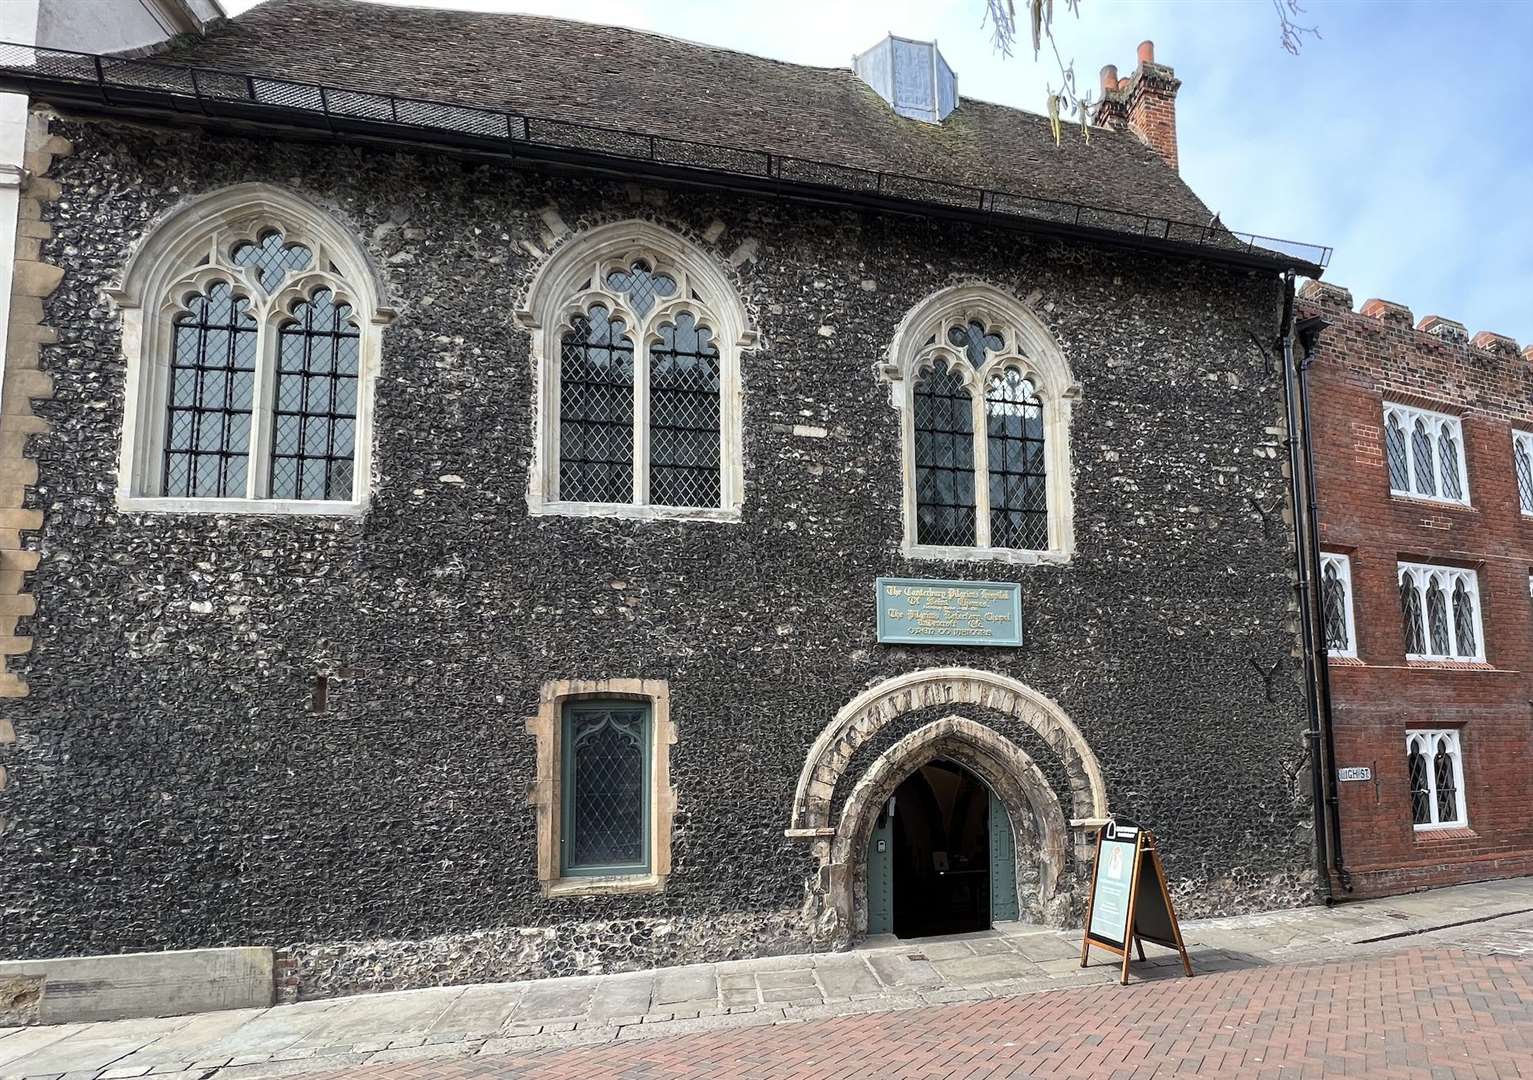 The unassuming Eastbridge Hospital entrance in Canterbury High Street hides a historical gem